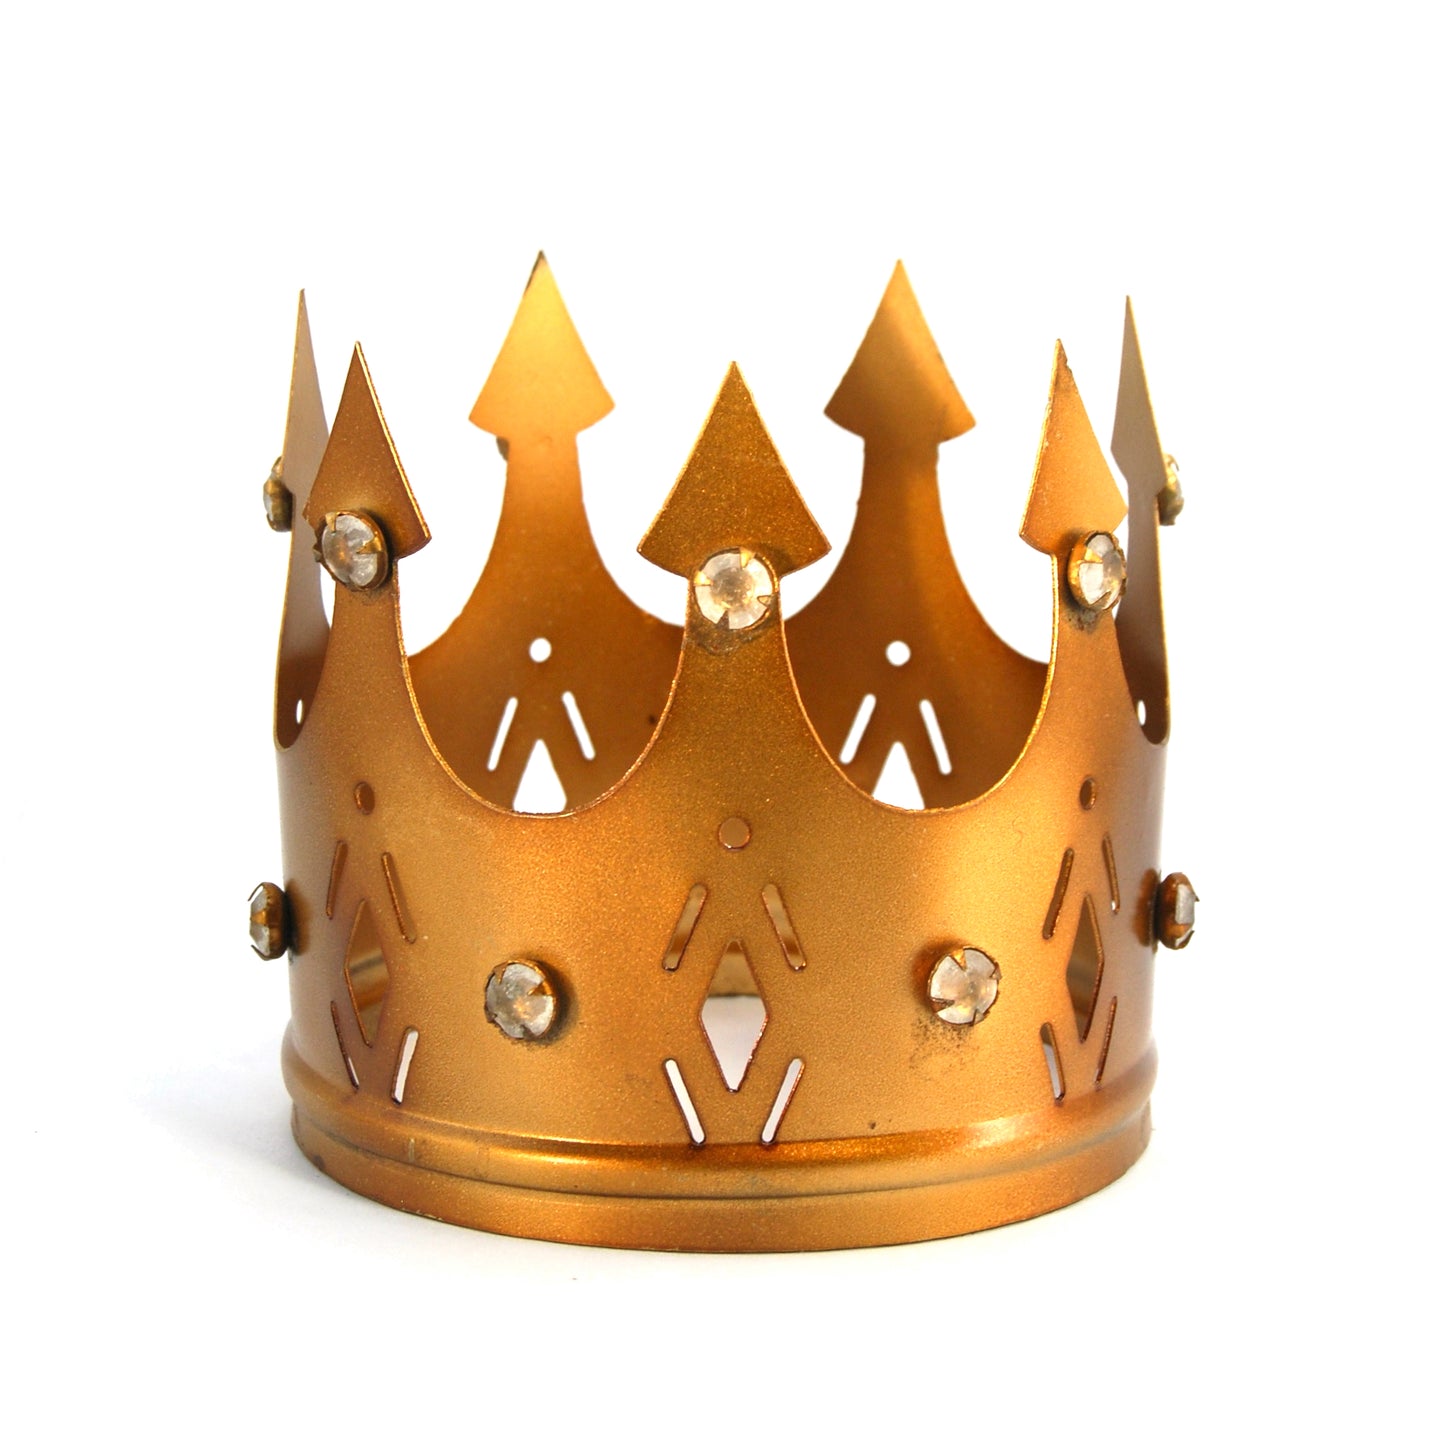 Jeweled Santos Crown in Antiqued Brass, Medium 4in